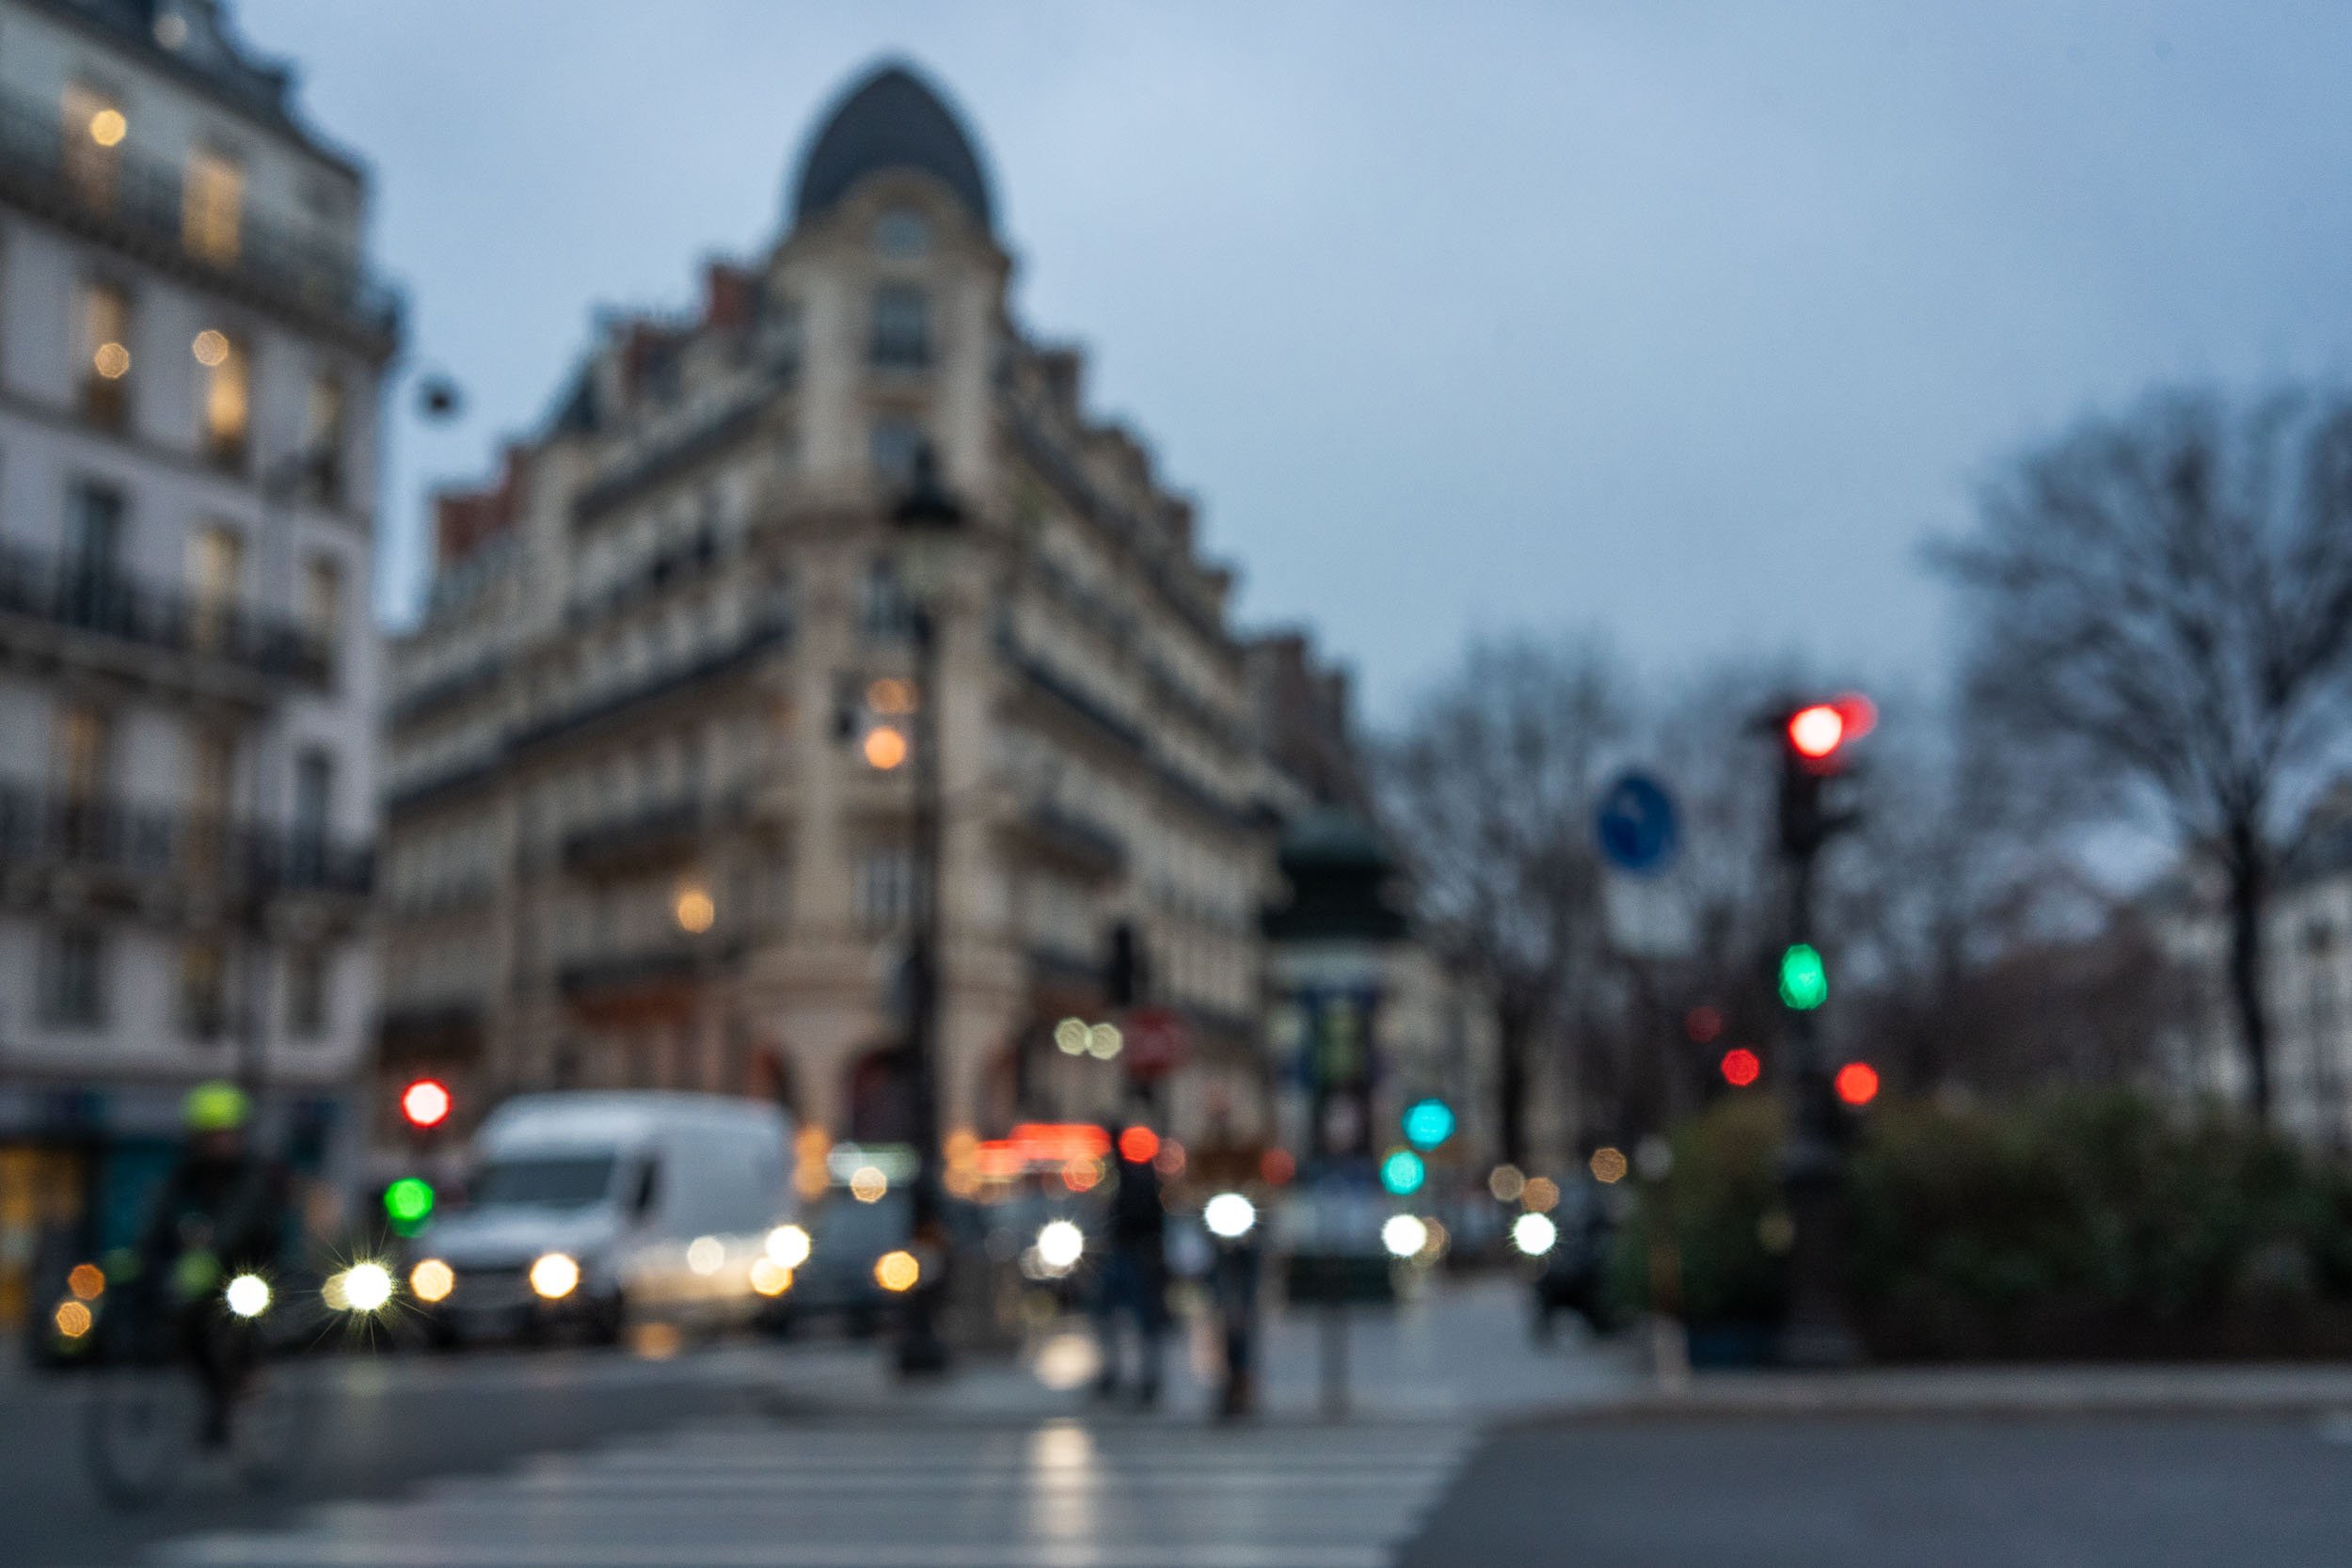 026-blurred-street-view-paris.jpg